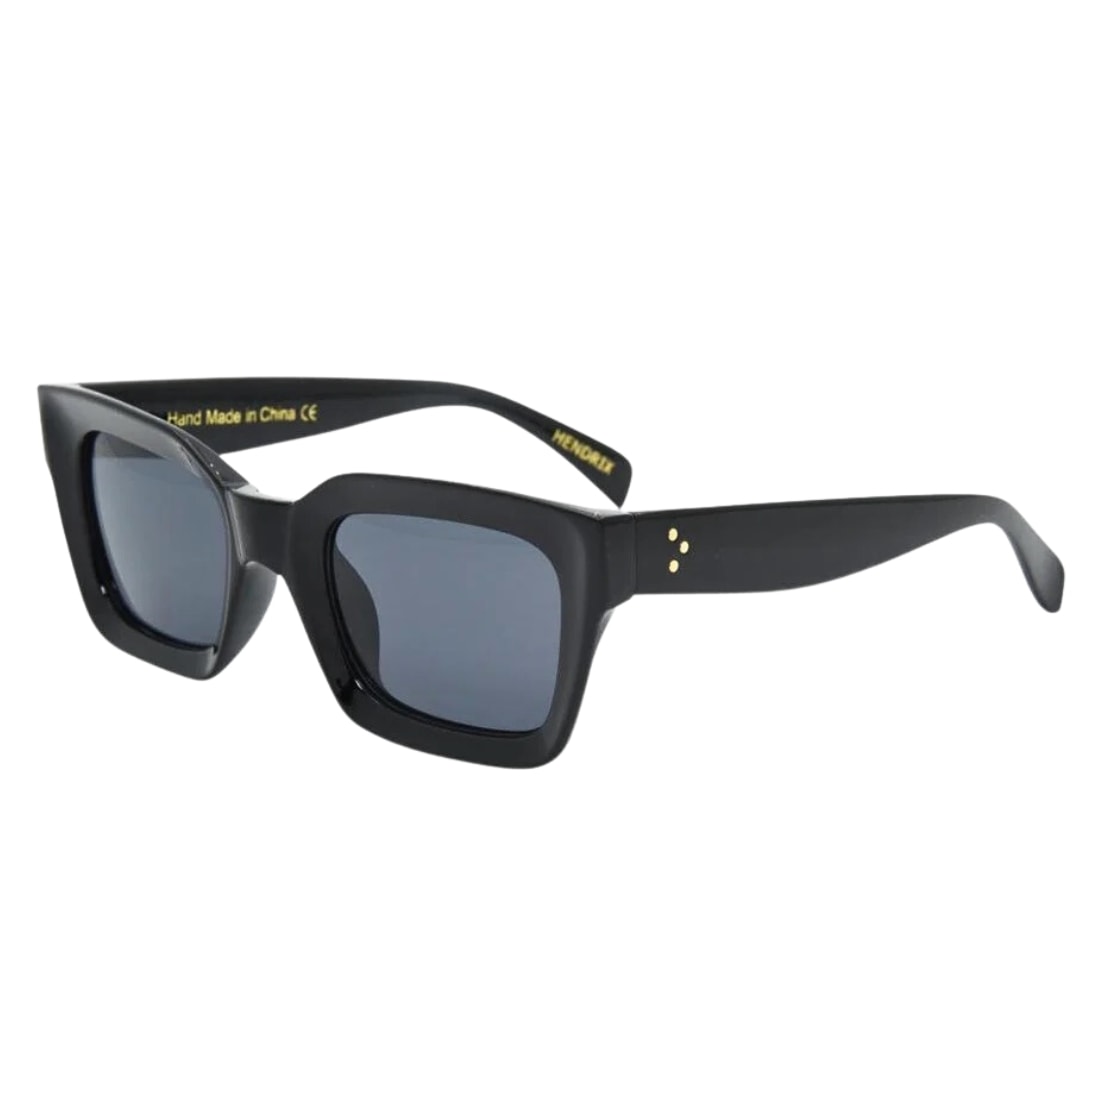 I-Sea Hendrix Polarised Sunglasses - Black/Smoke Polarized Lens - Square/Rectangular Sunglasses by I-Sea